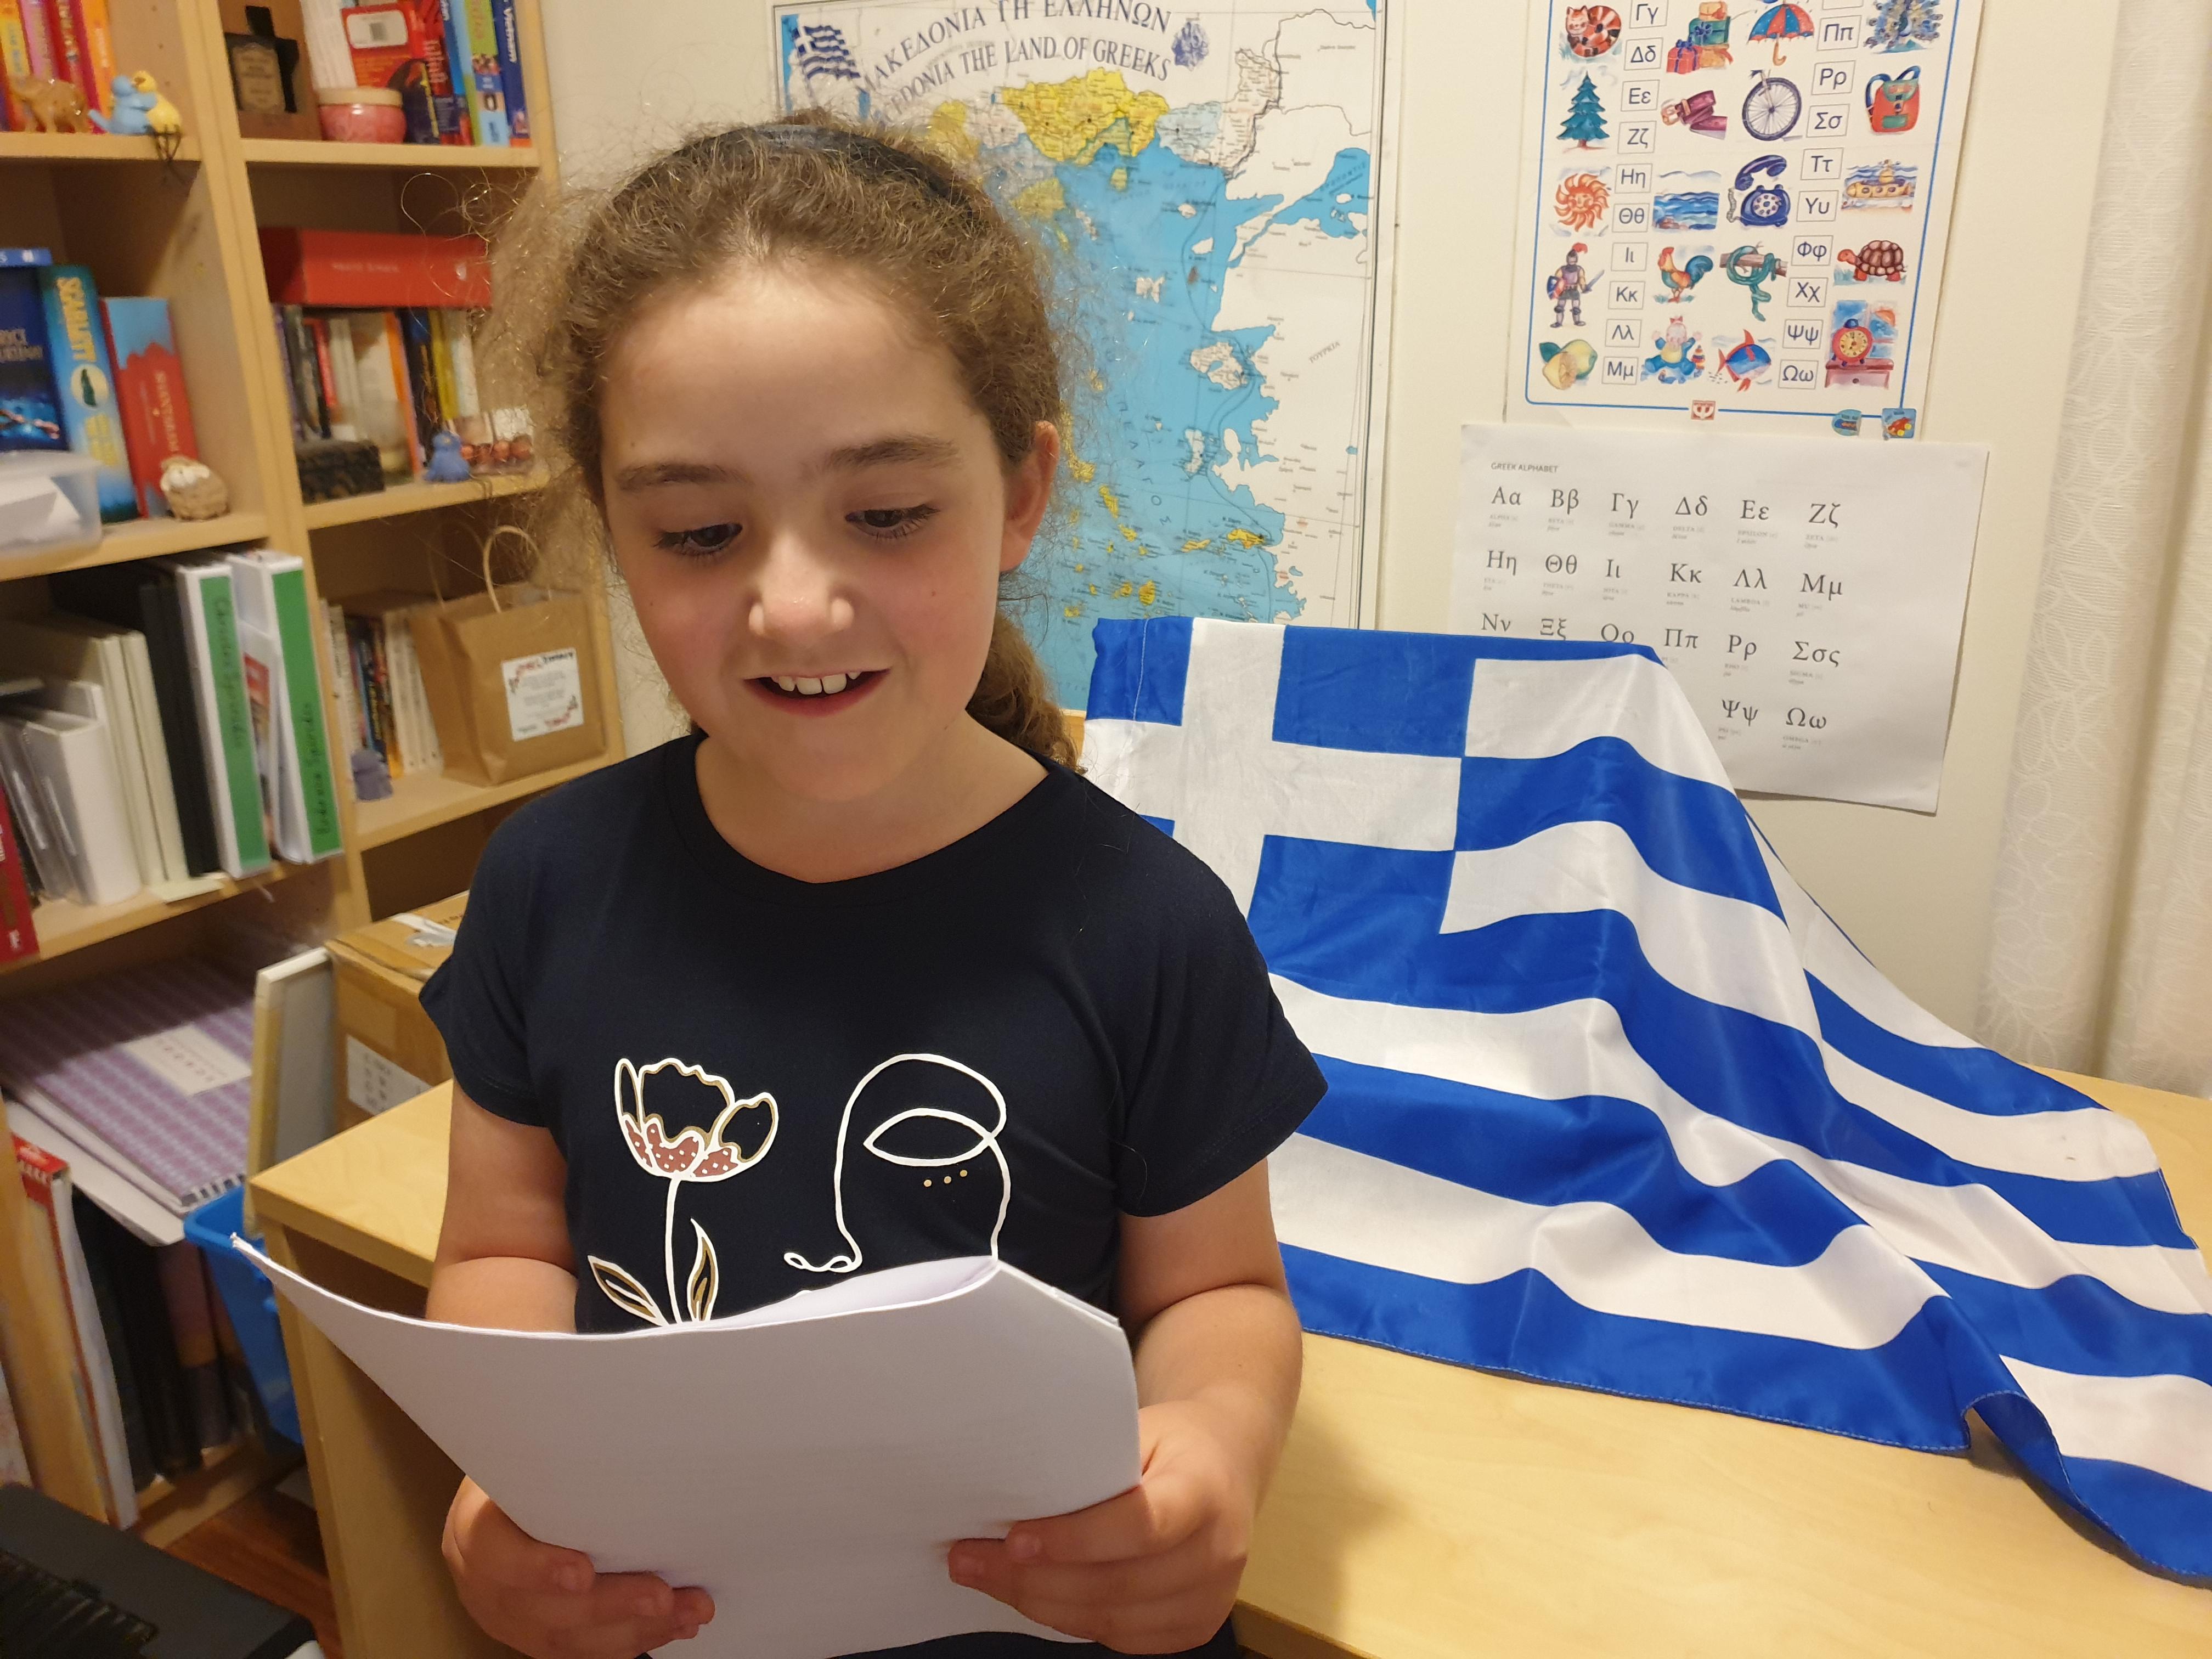 Greek language school student Evdoxia. 